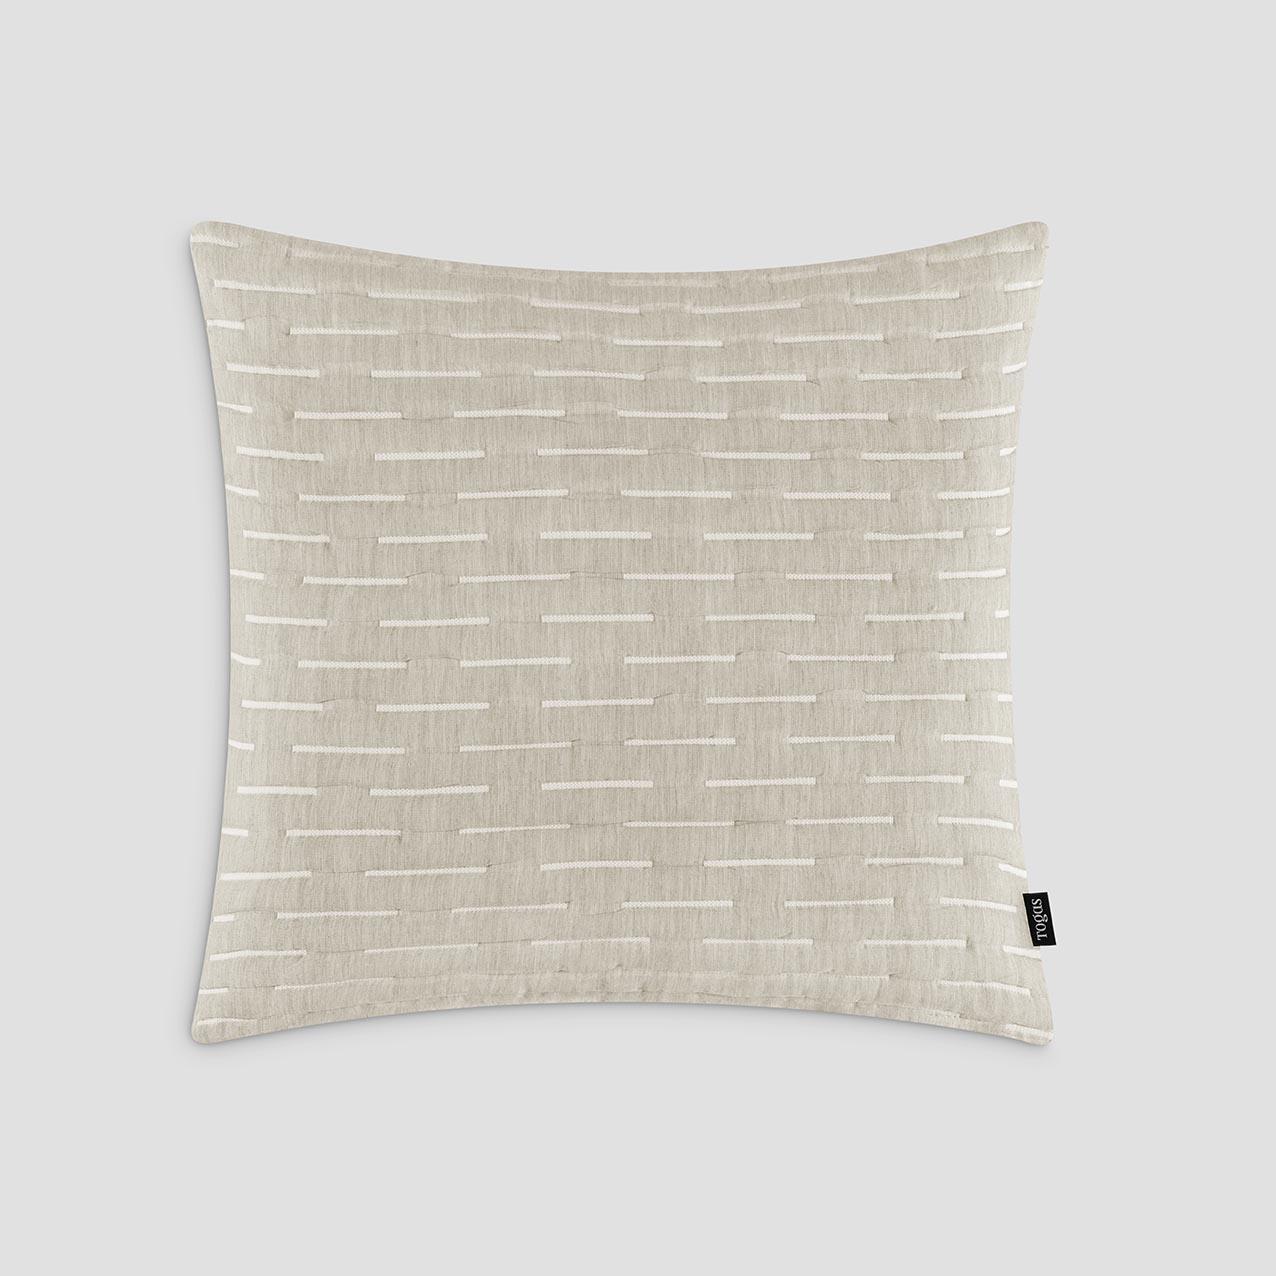 Декоративная подушка Togas Лассен бежевая 45х45 см, цвет бежевый - фото 2